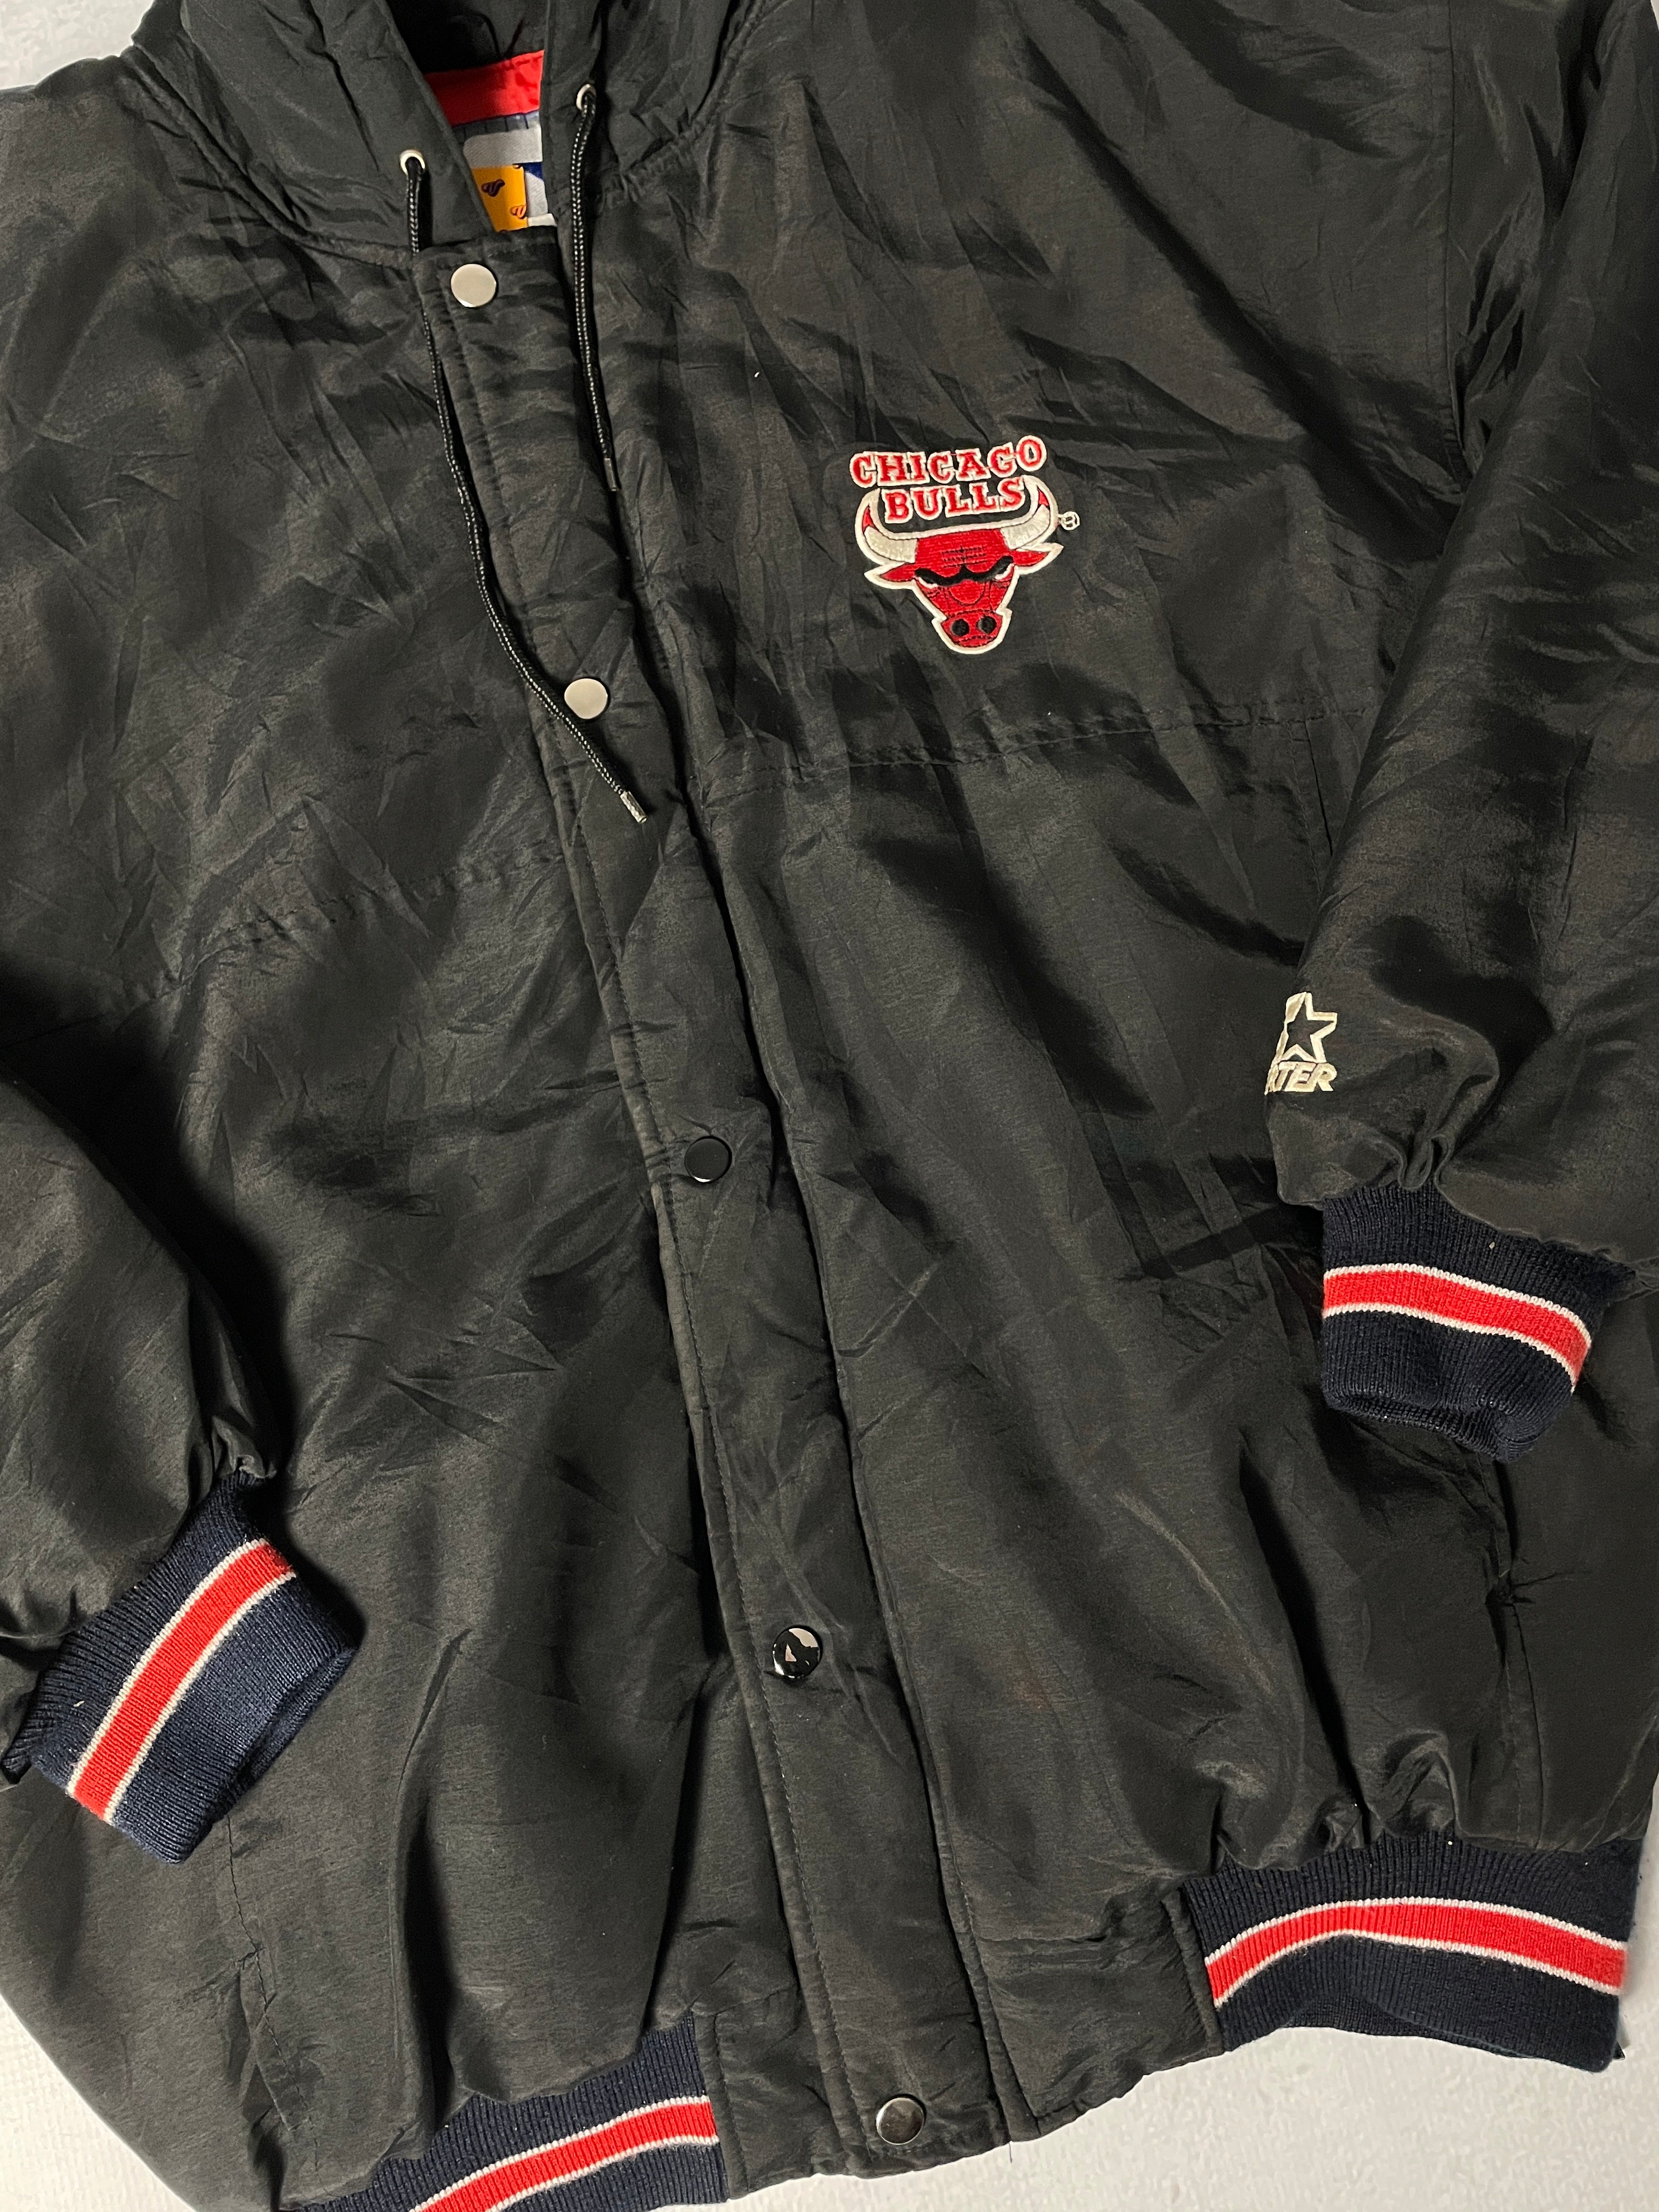 Vintage NBA Chicago Bulls Insulated Jacket - Men's Large